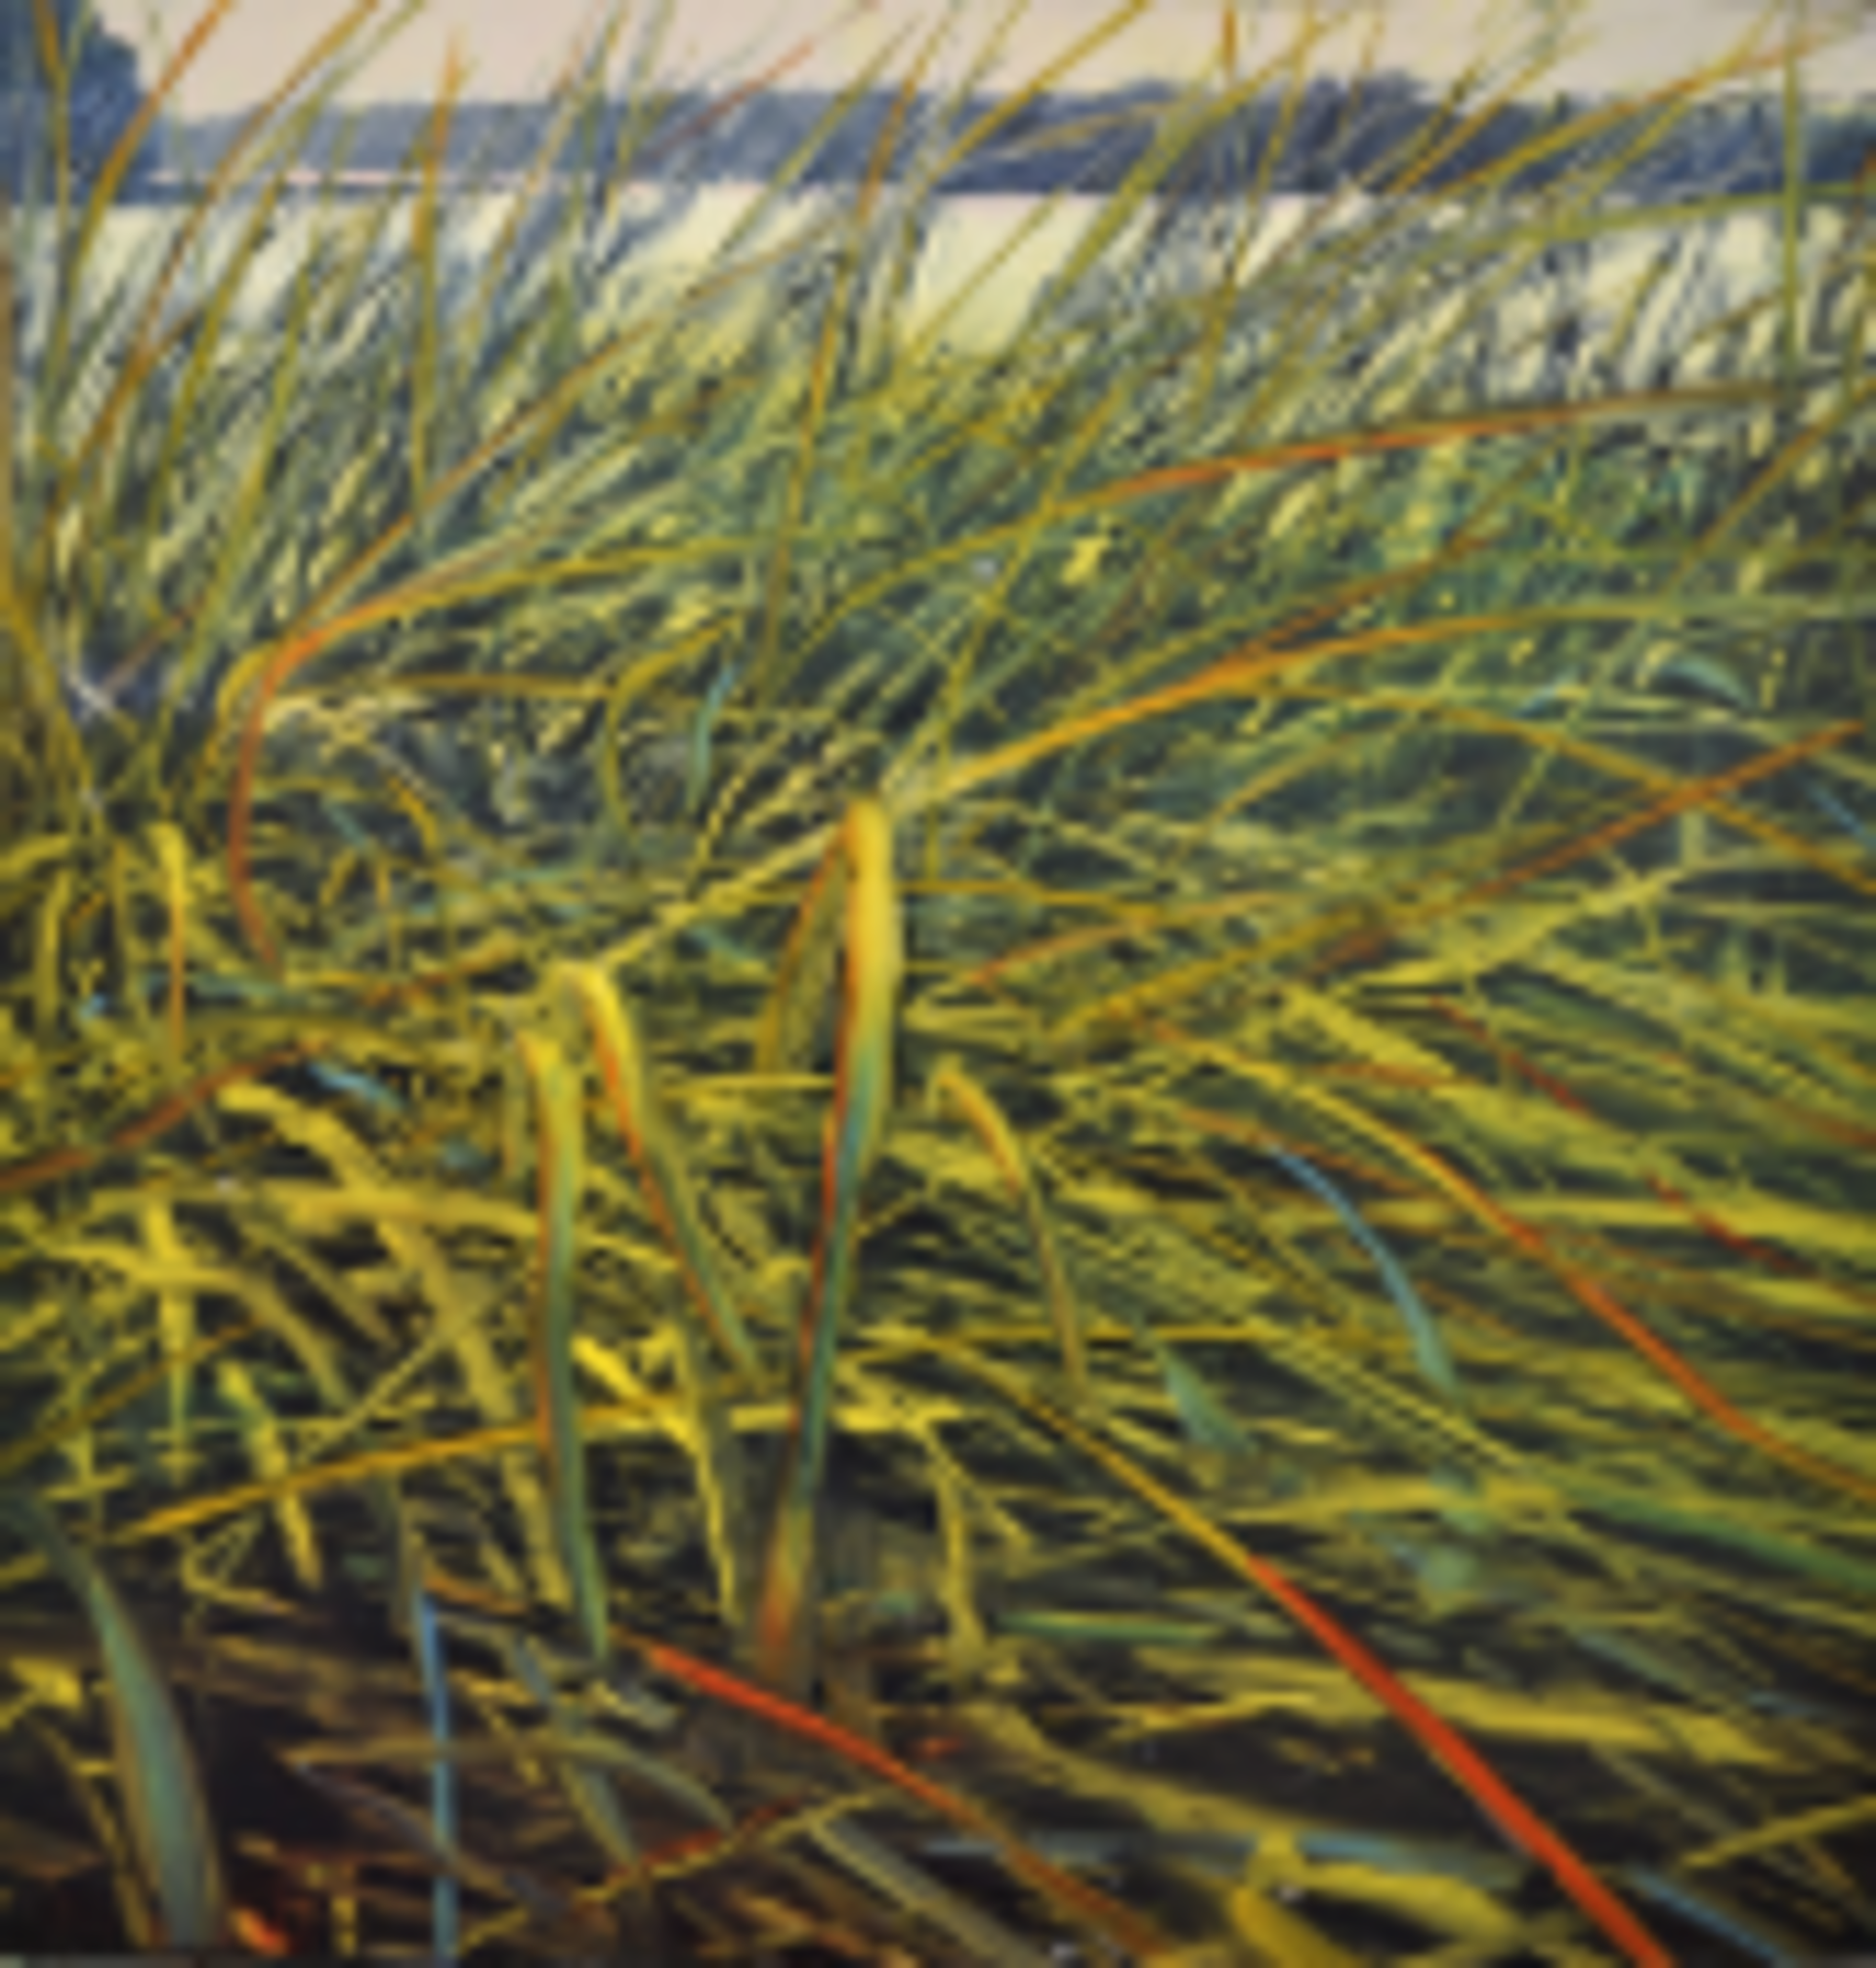 River Reeds by David Allen Dunlop